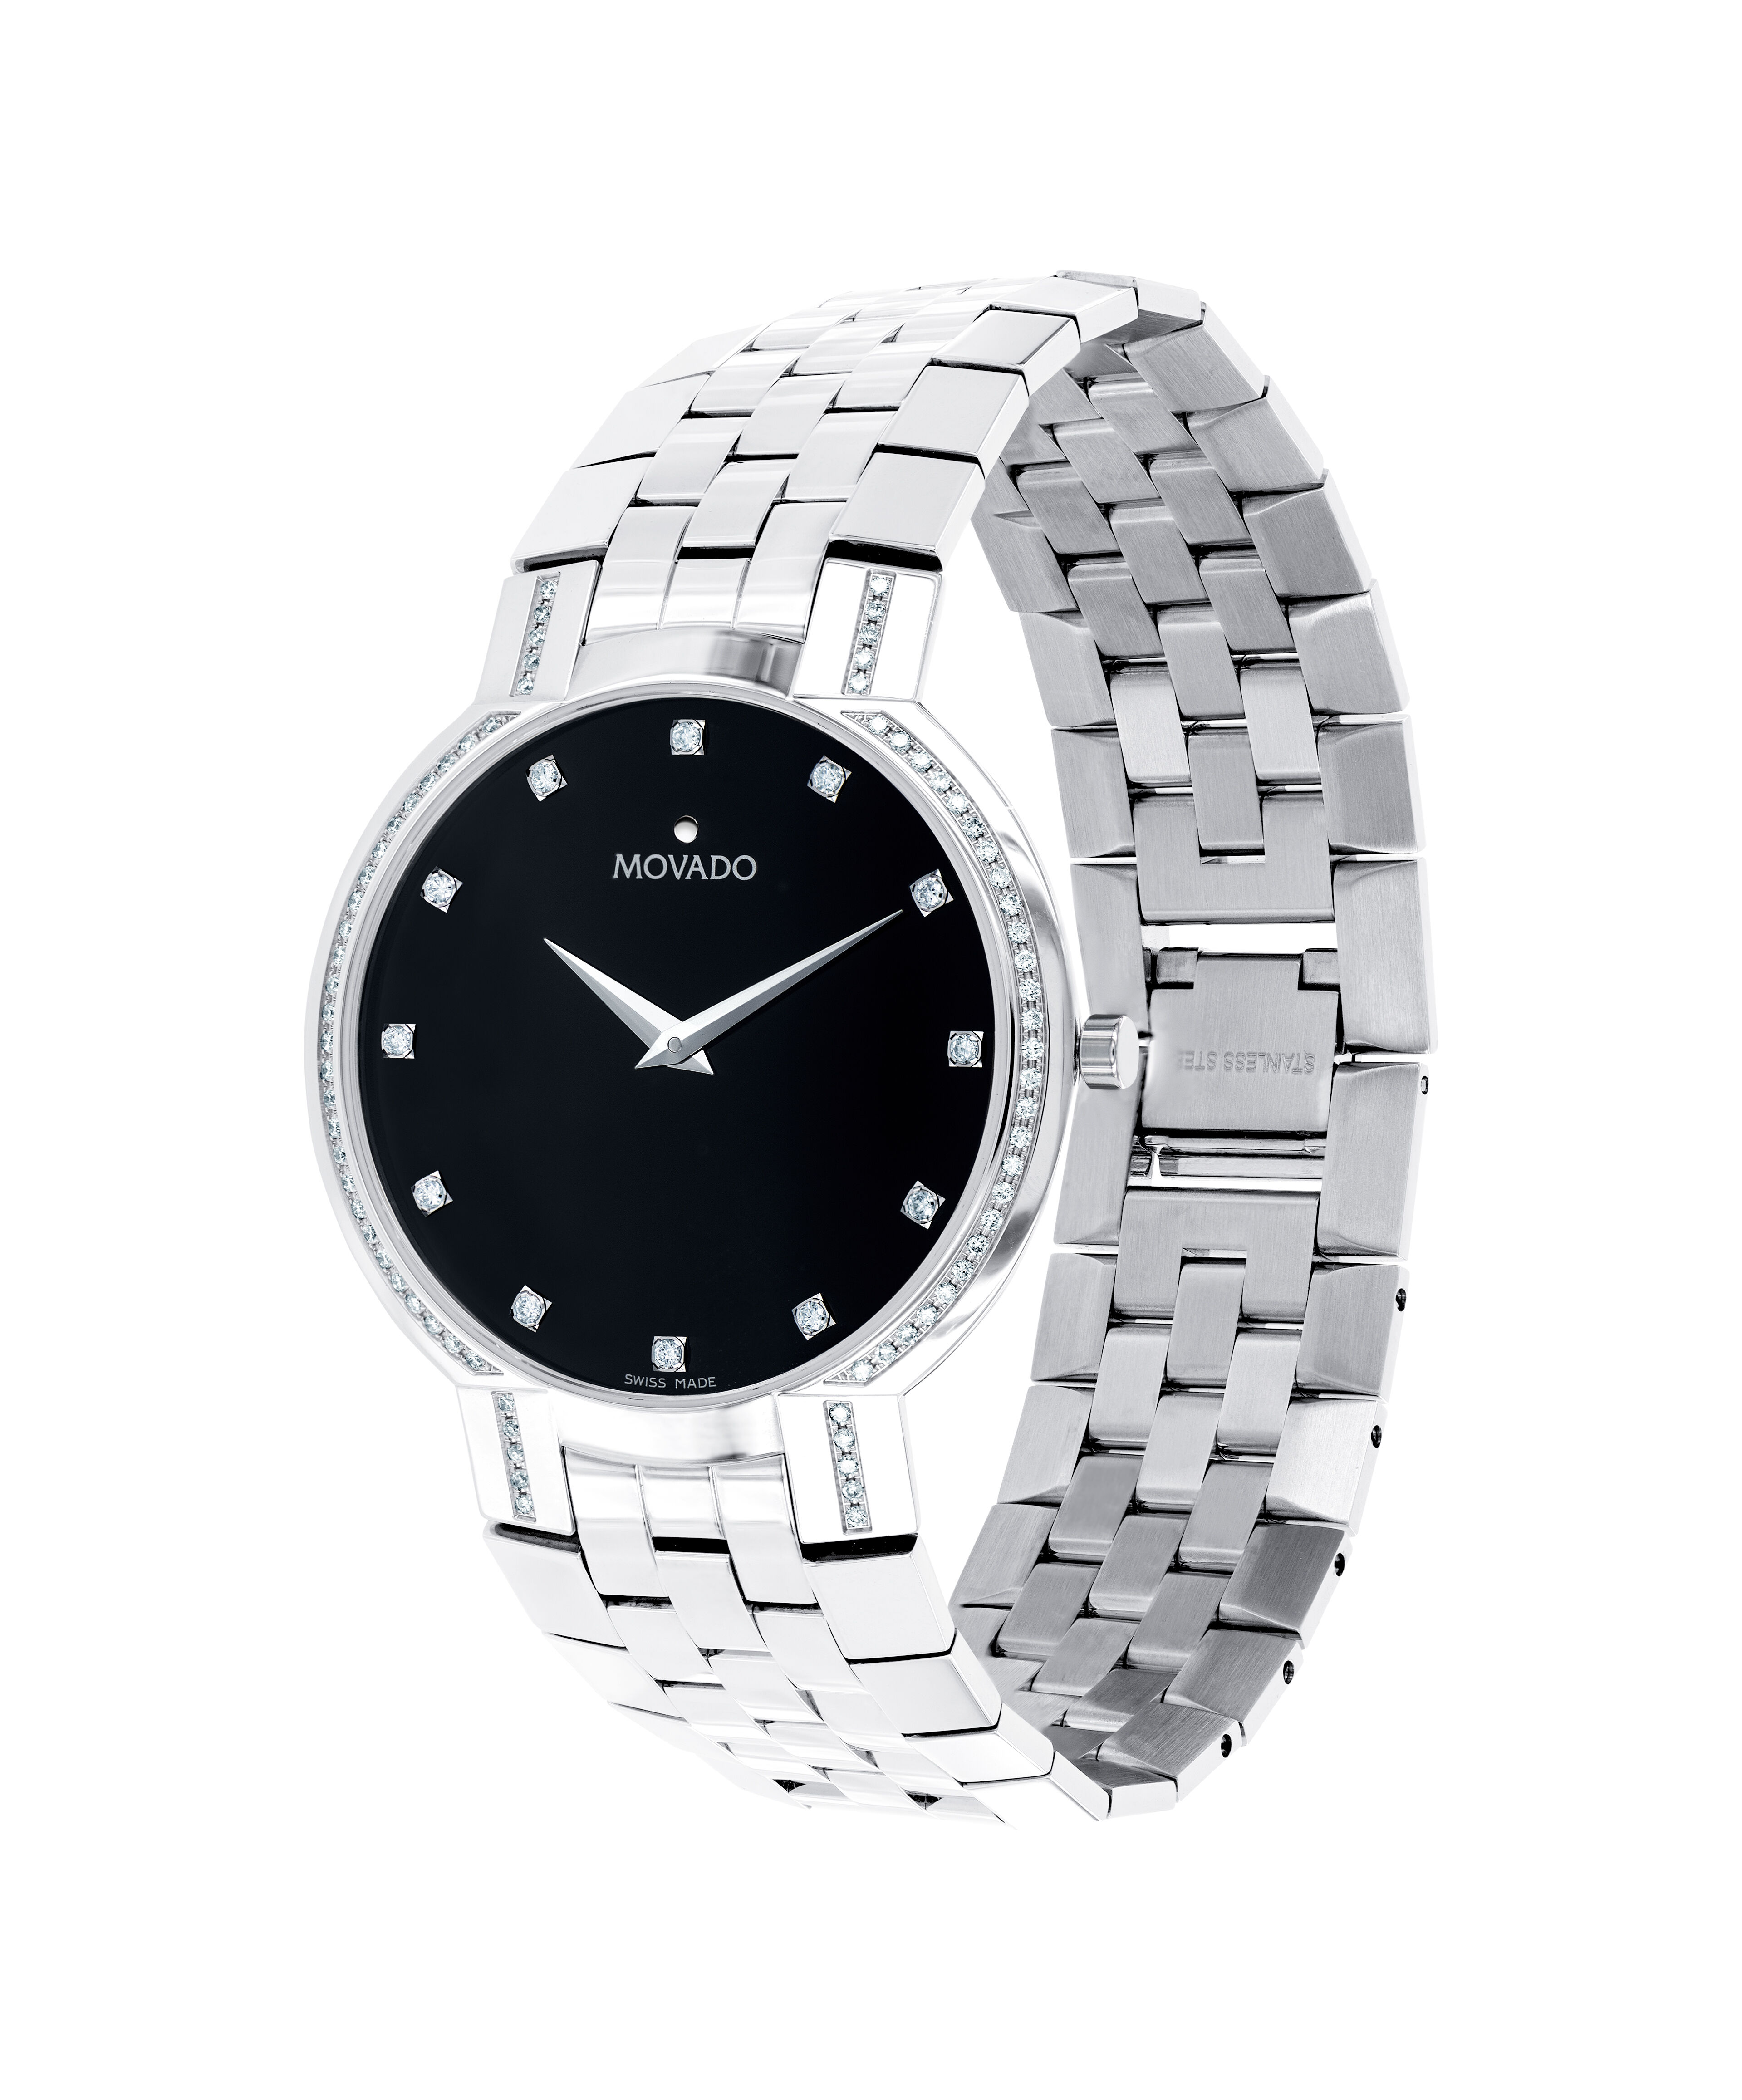 Patek Watch Replica Price